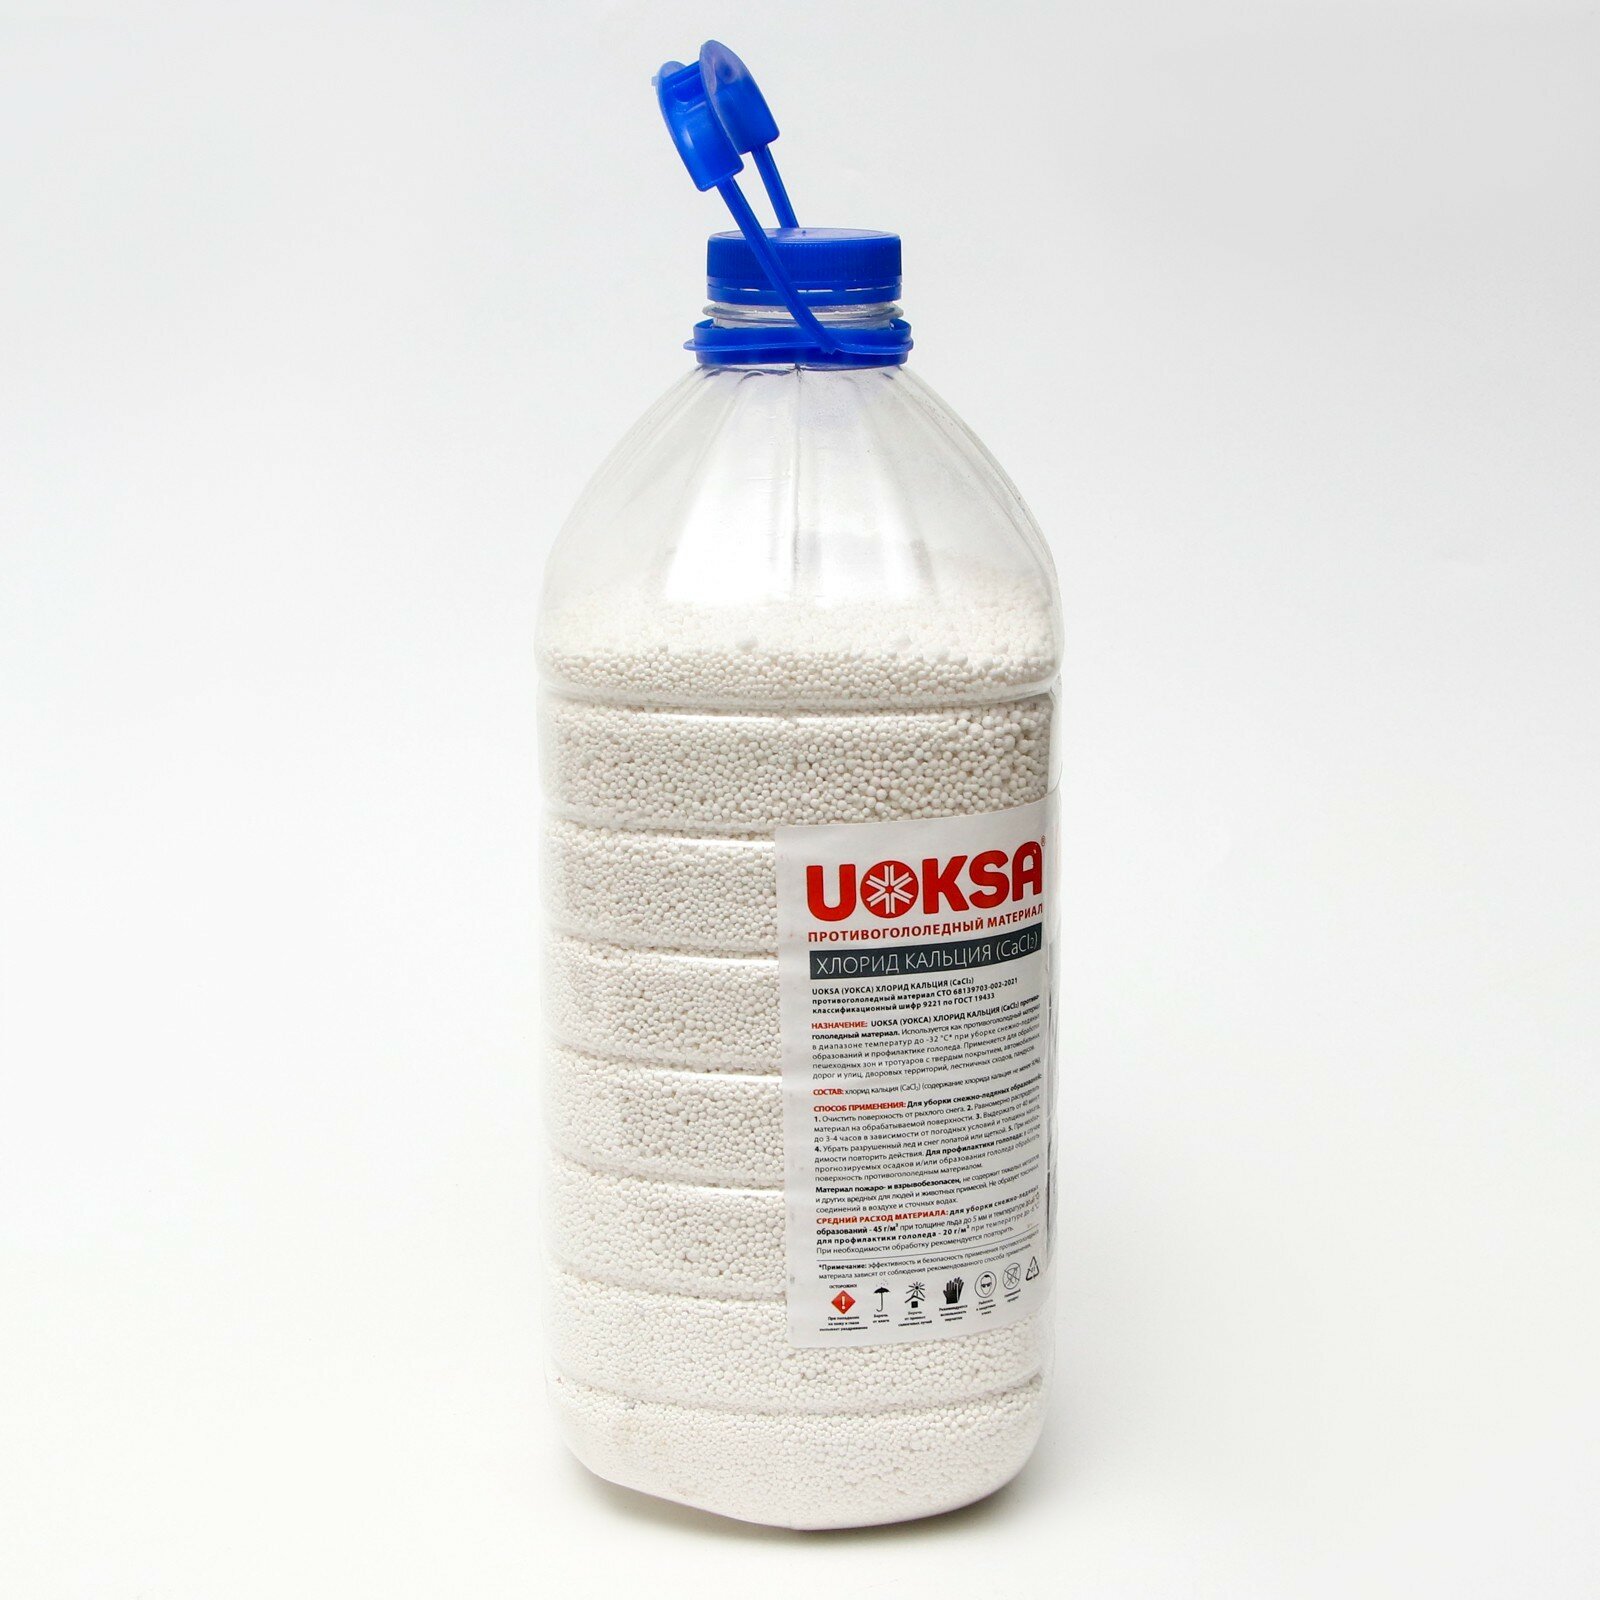 Реагент противогололедный UOKSA Хлористый кальций 5кг бутылка - фотография № 10